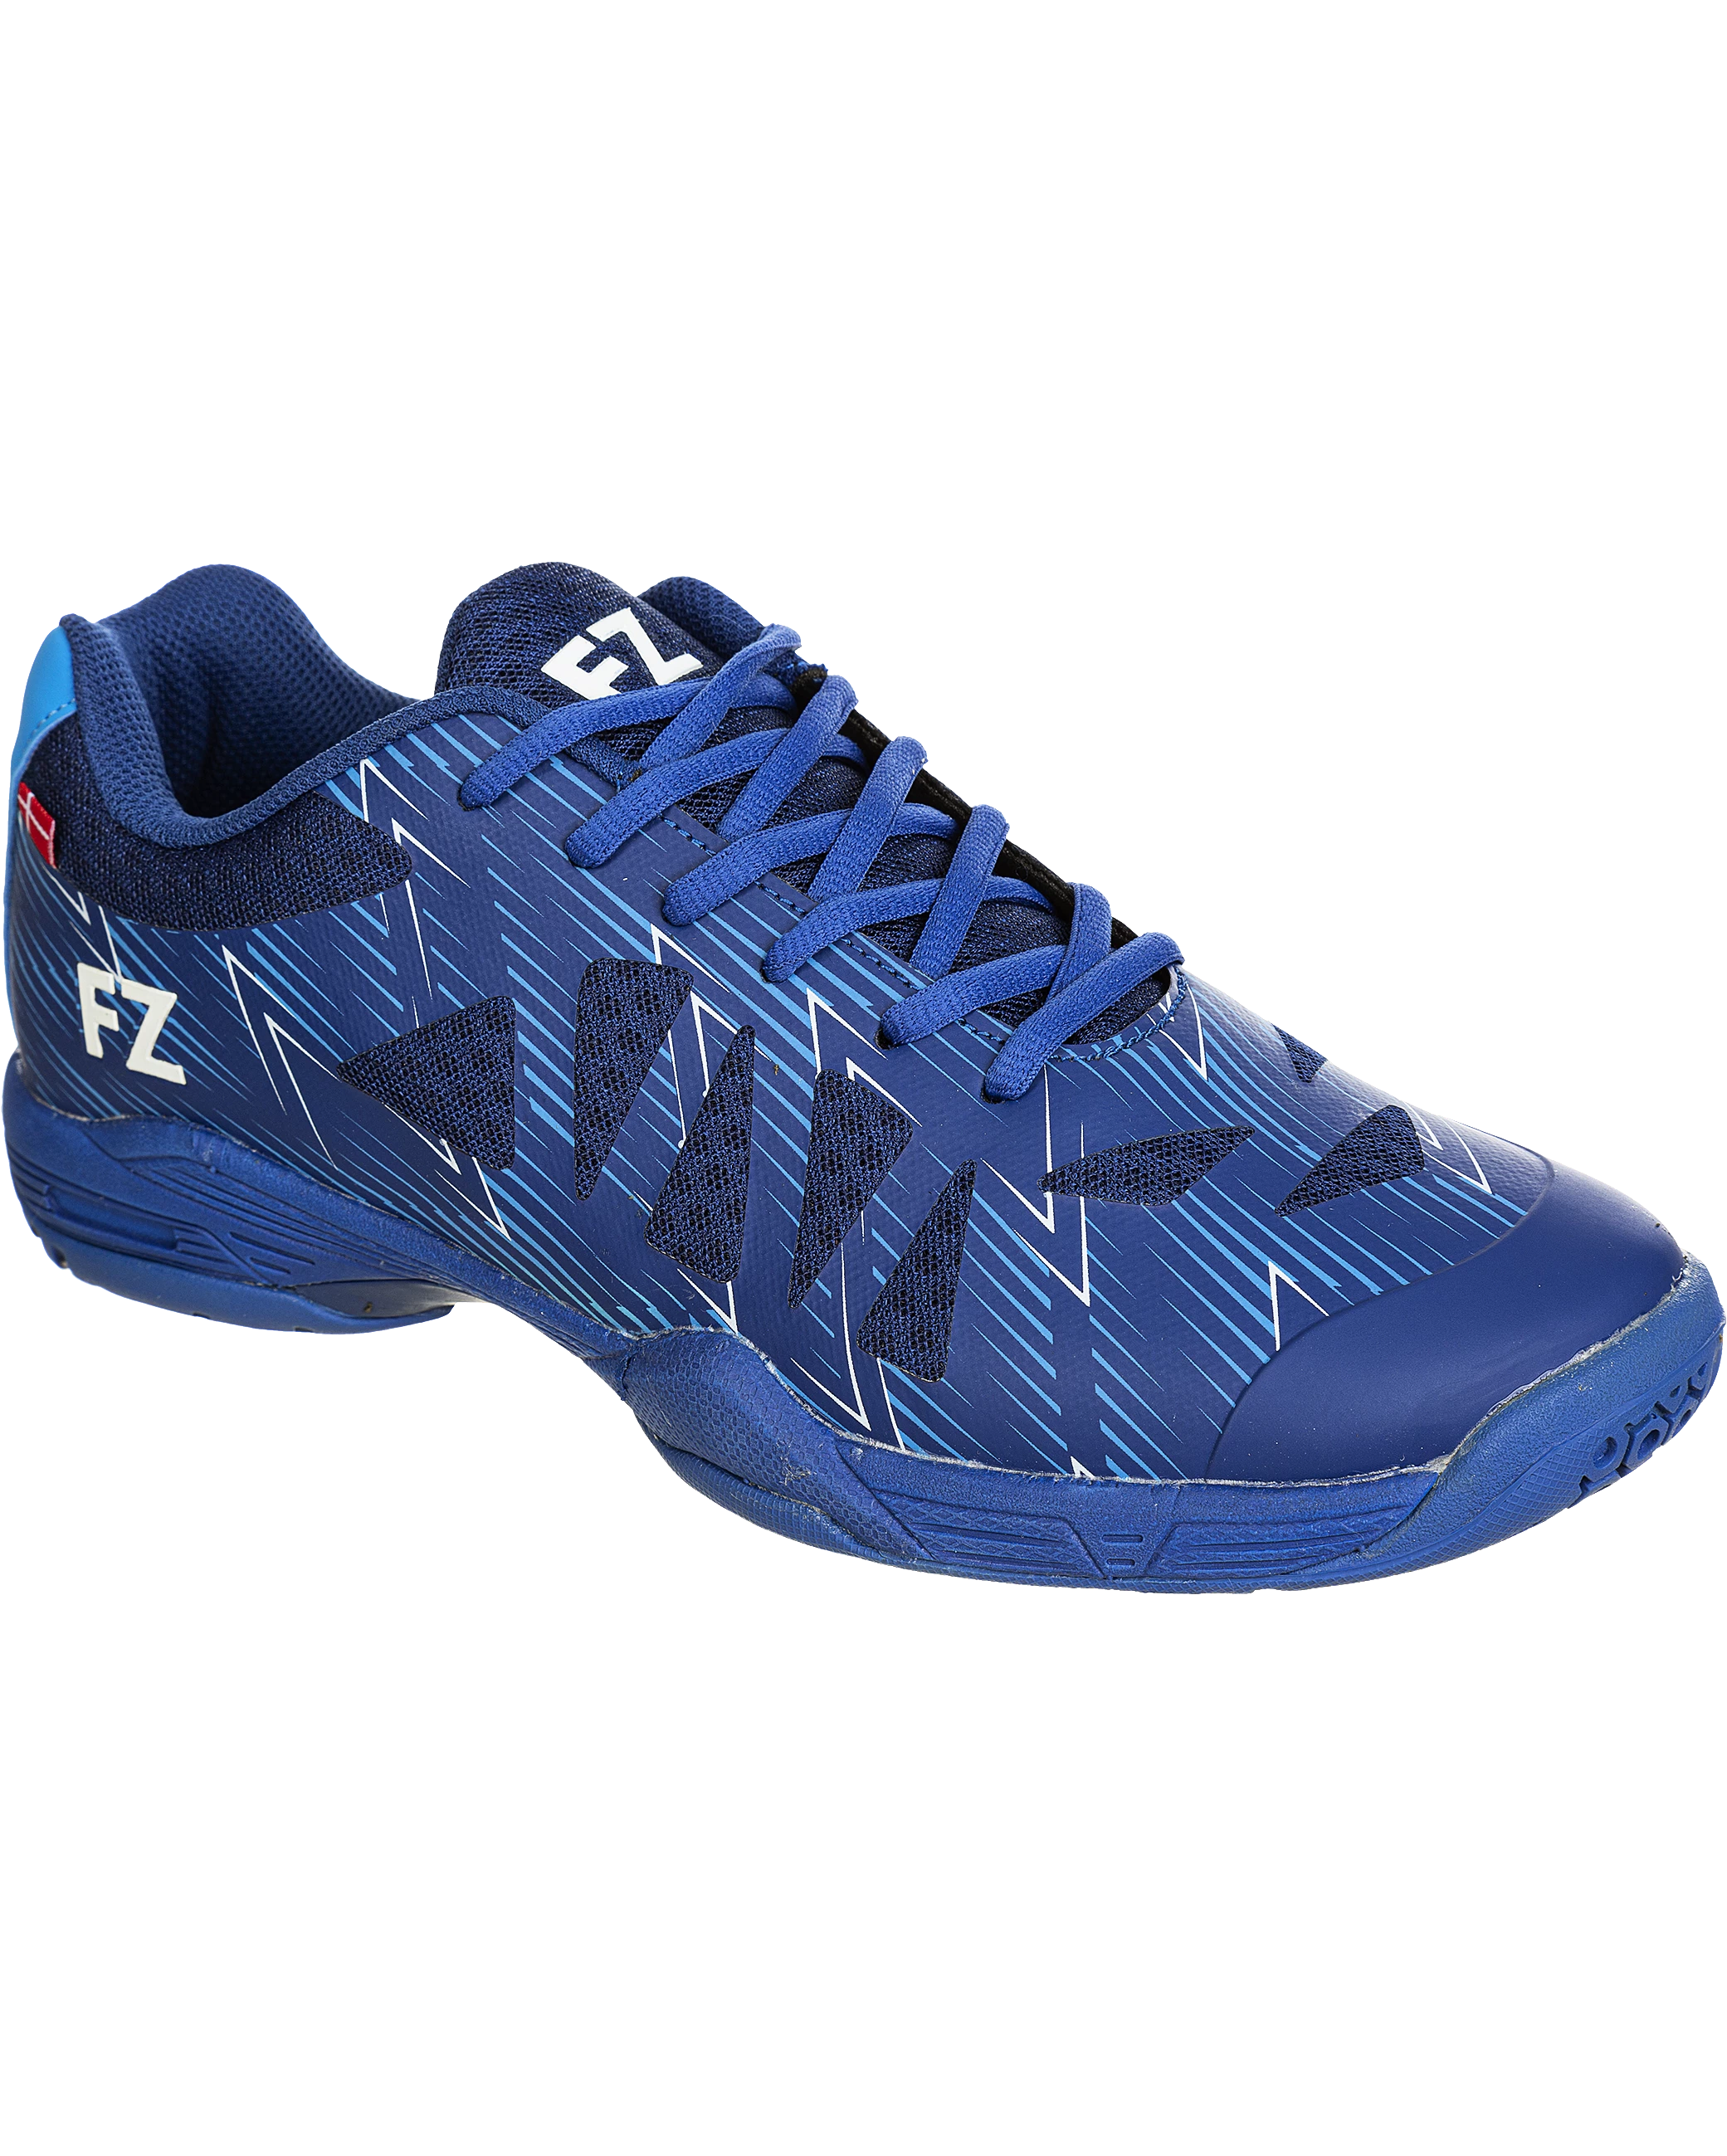 Men's indoor shoes FZ Forza Tarami M EUR 45